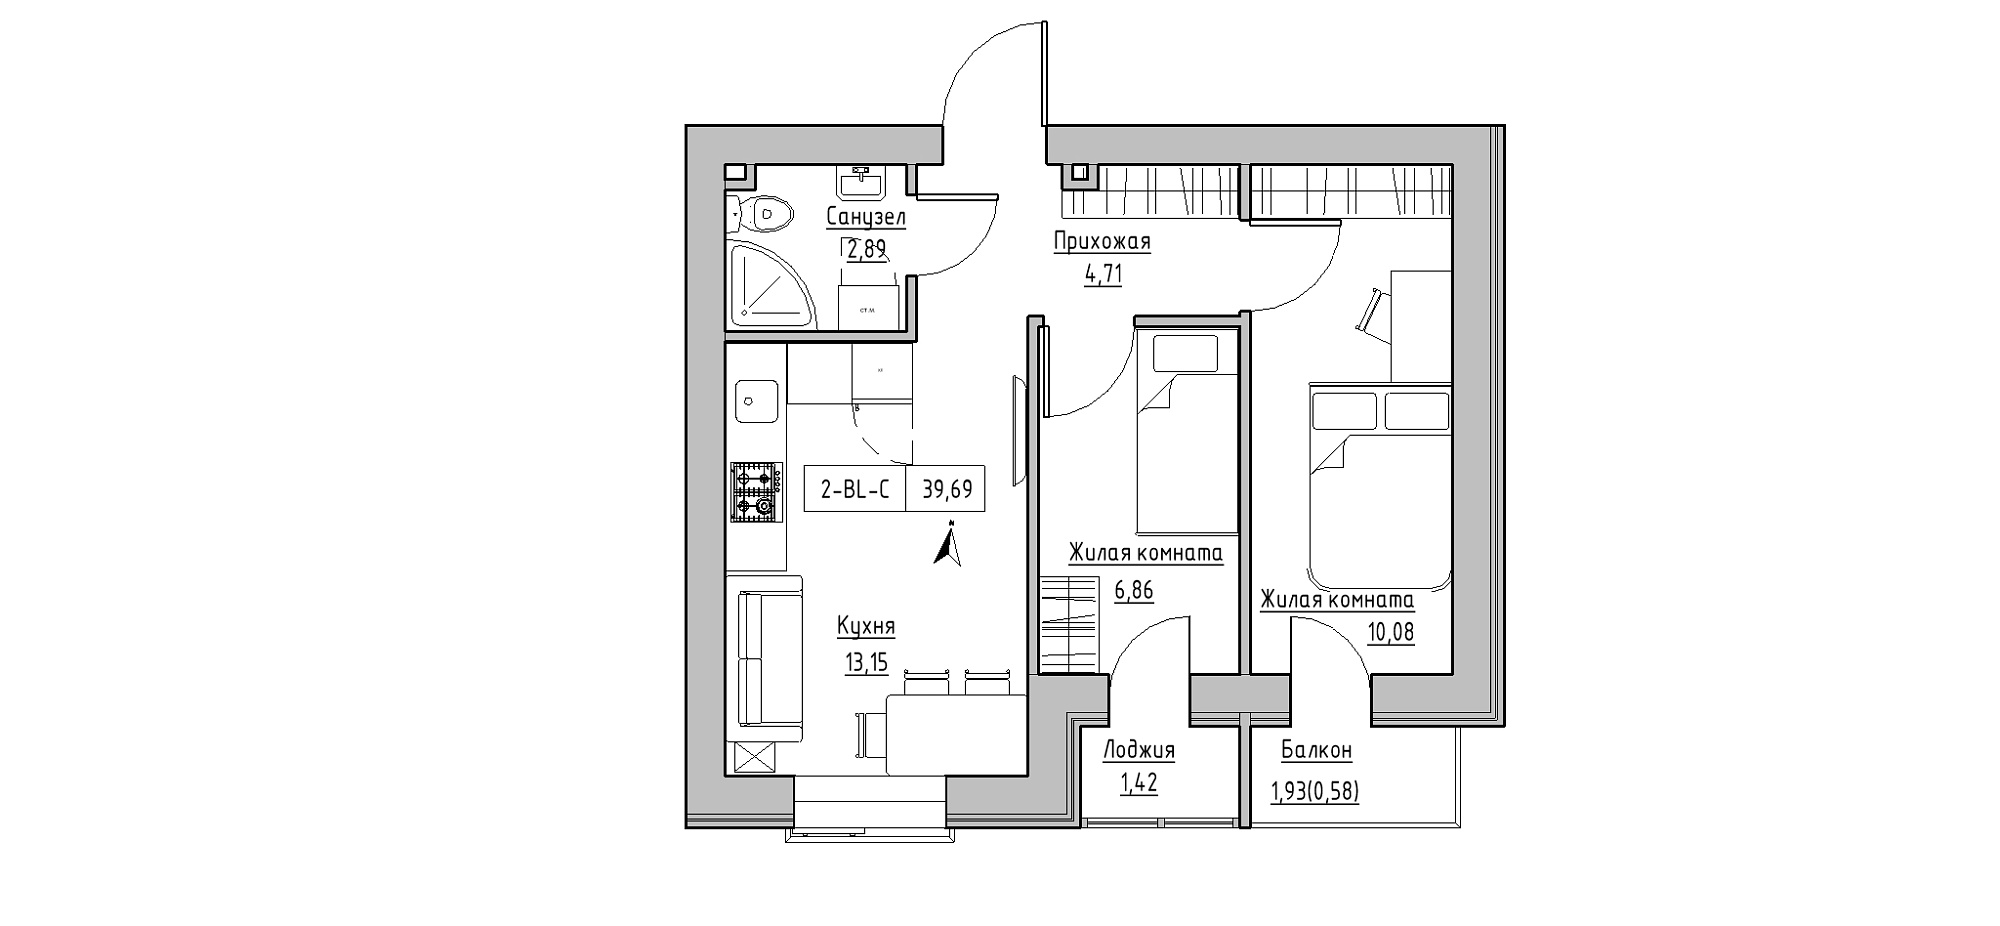 Planning 2-rm flats area 39.69m2, KS-020-04/0005.